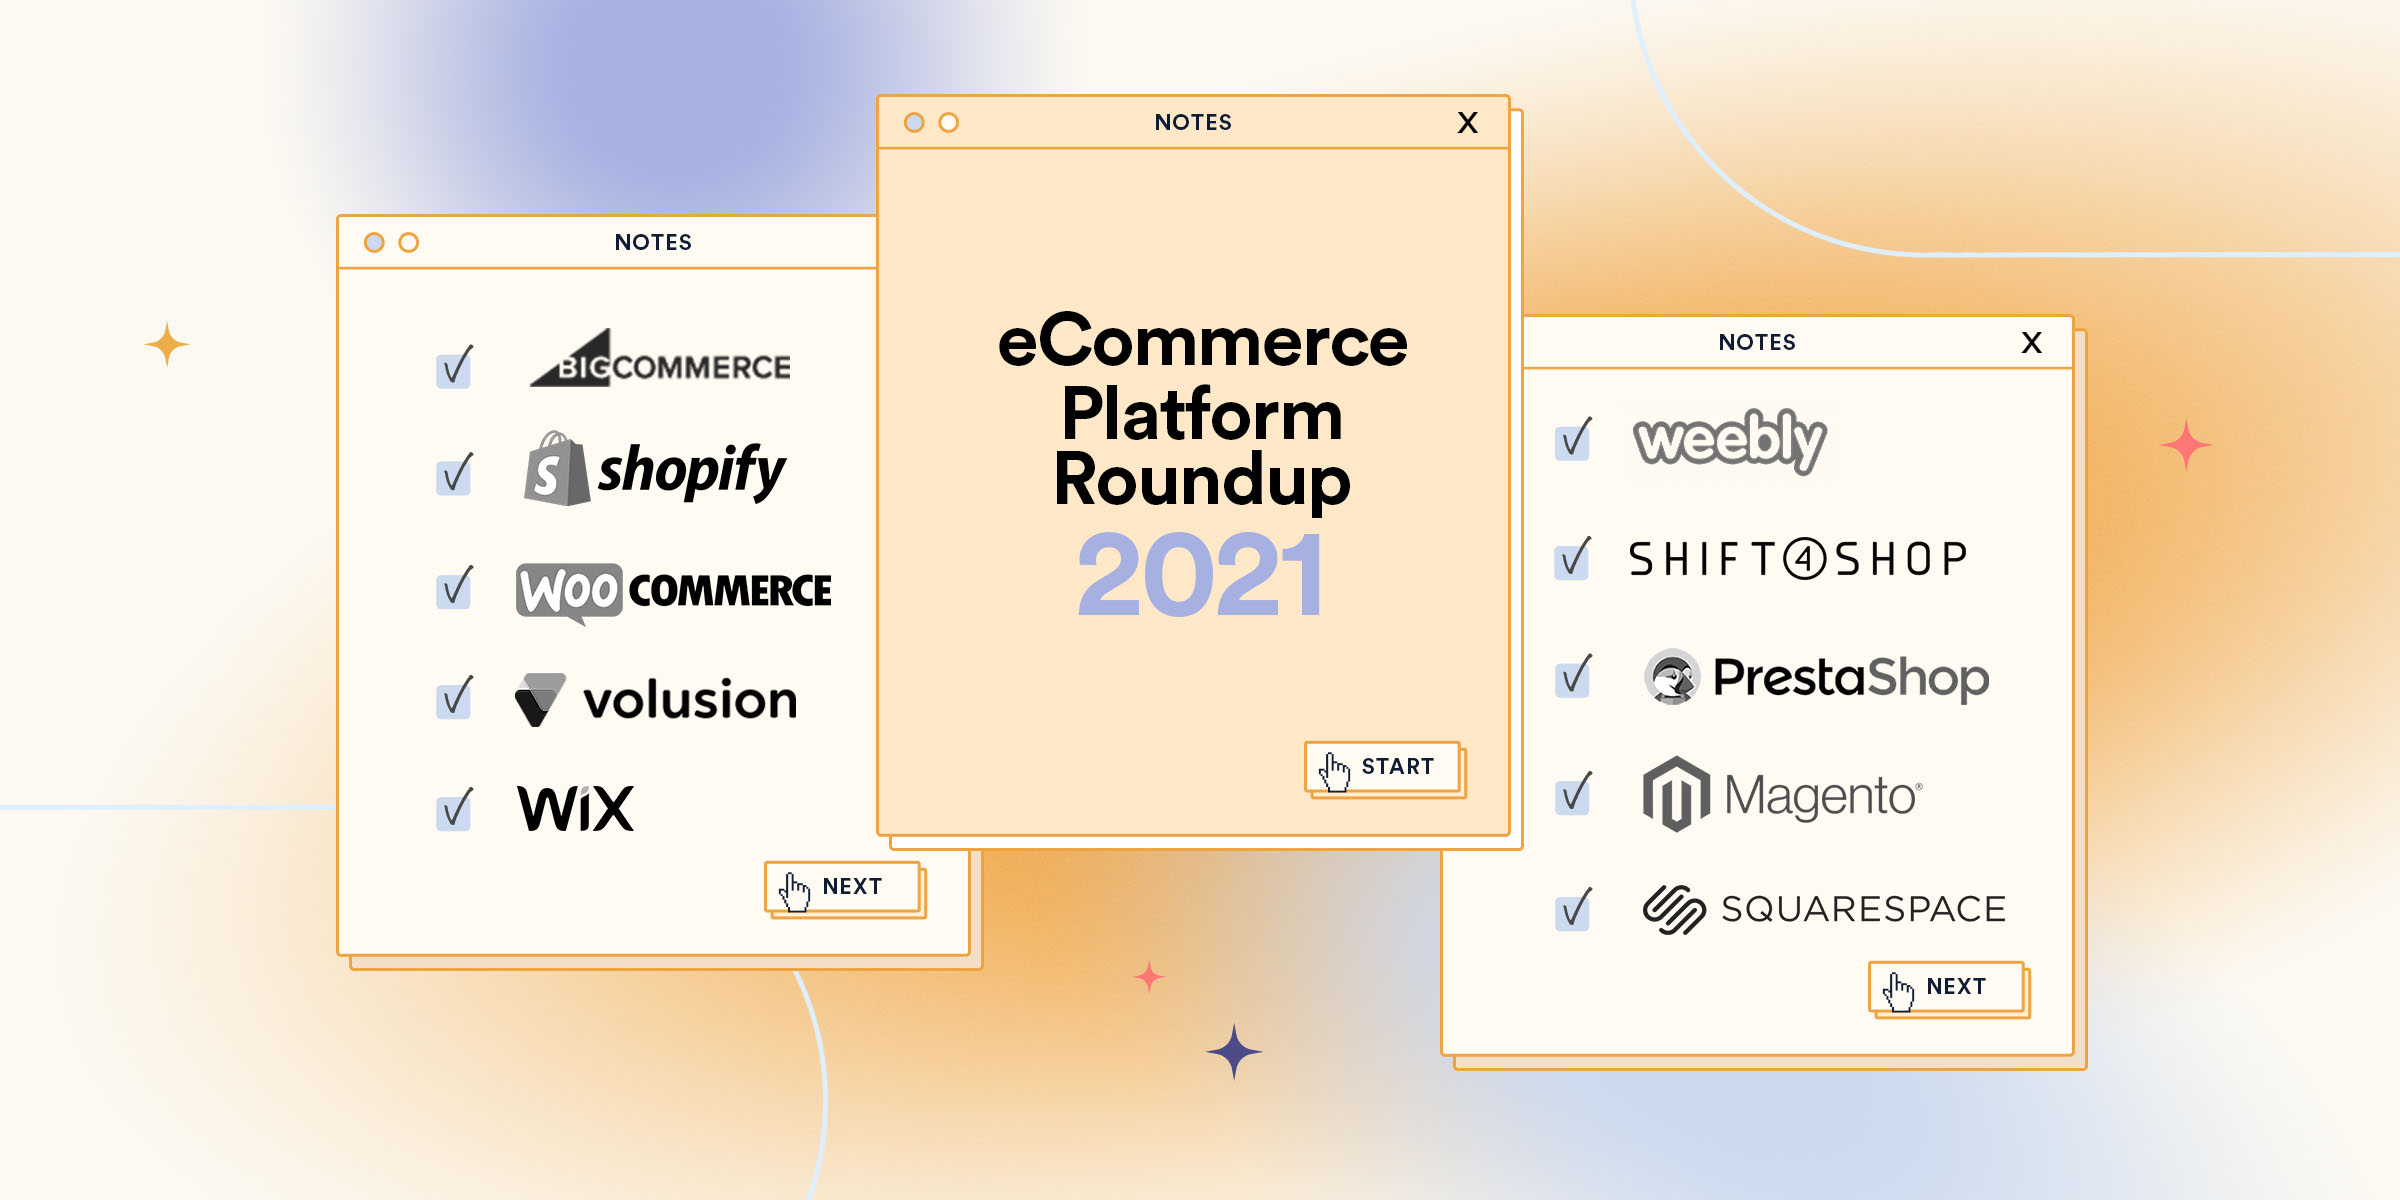 eCommerce Platform Roundup 2021